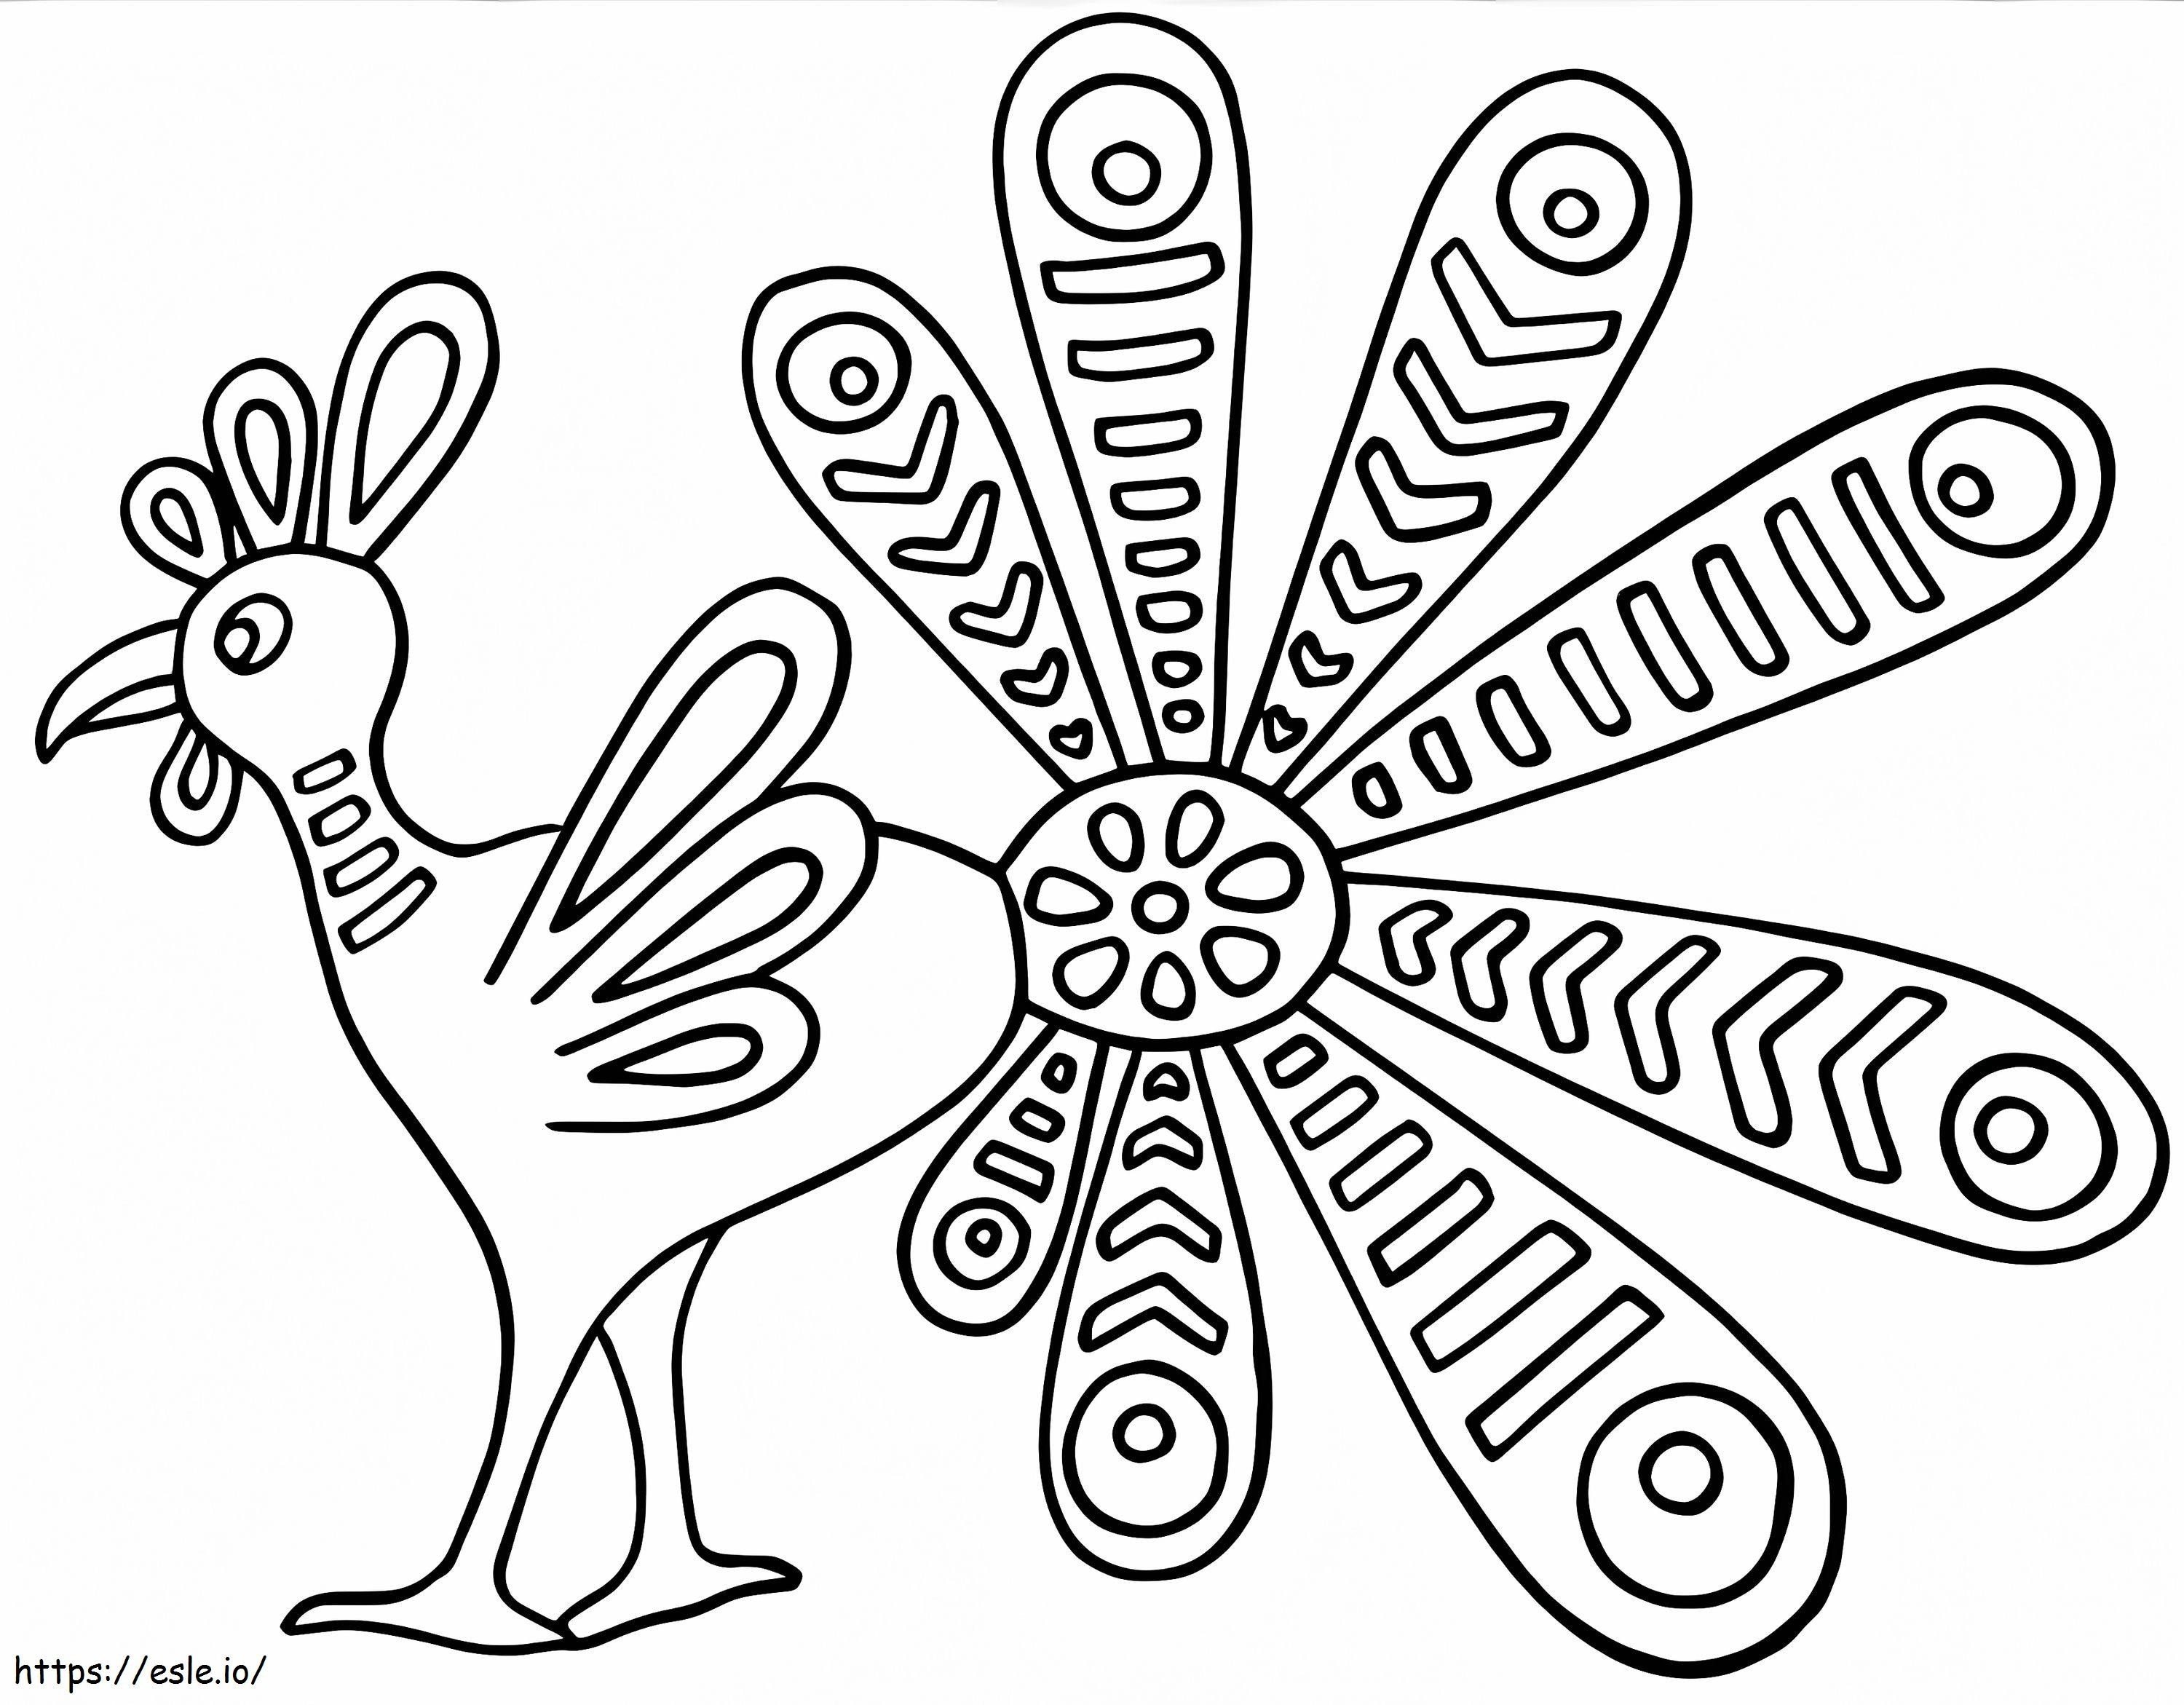 Peacock Alebrijes ausmalbilder